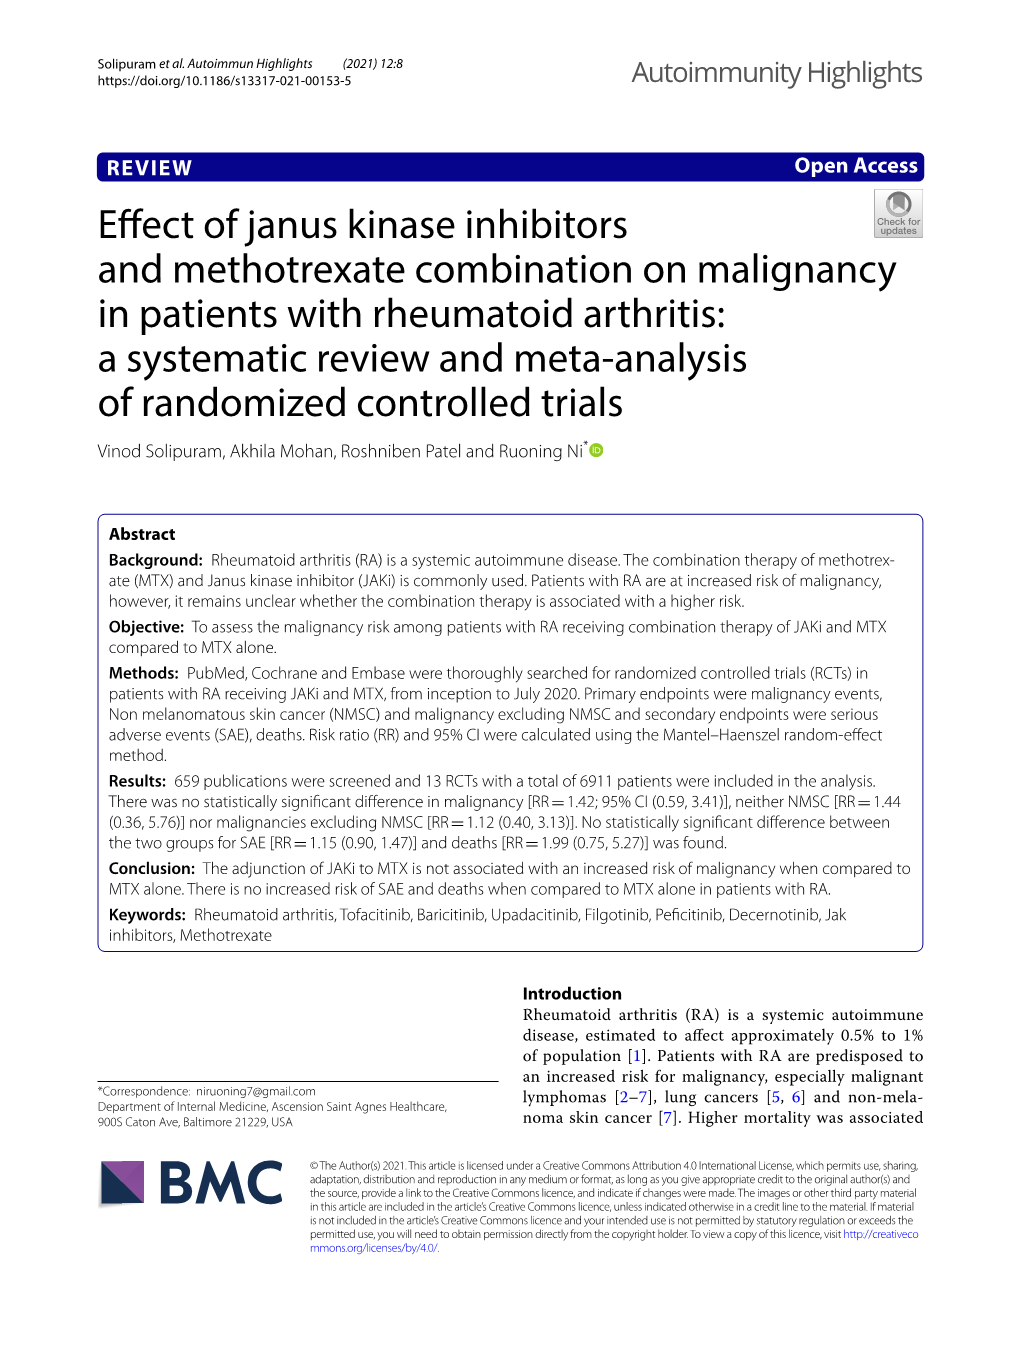 Effect of Janus Kinase Inhibitors and Methotrexate Combination On